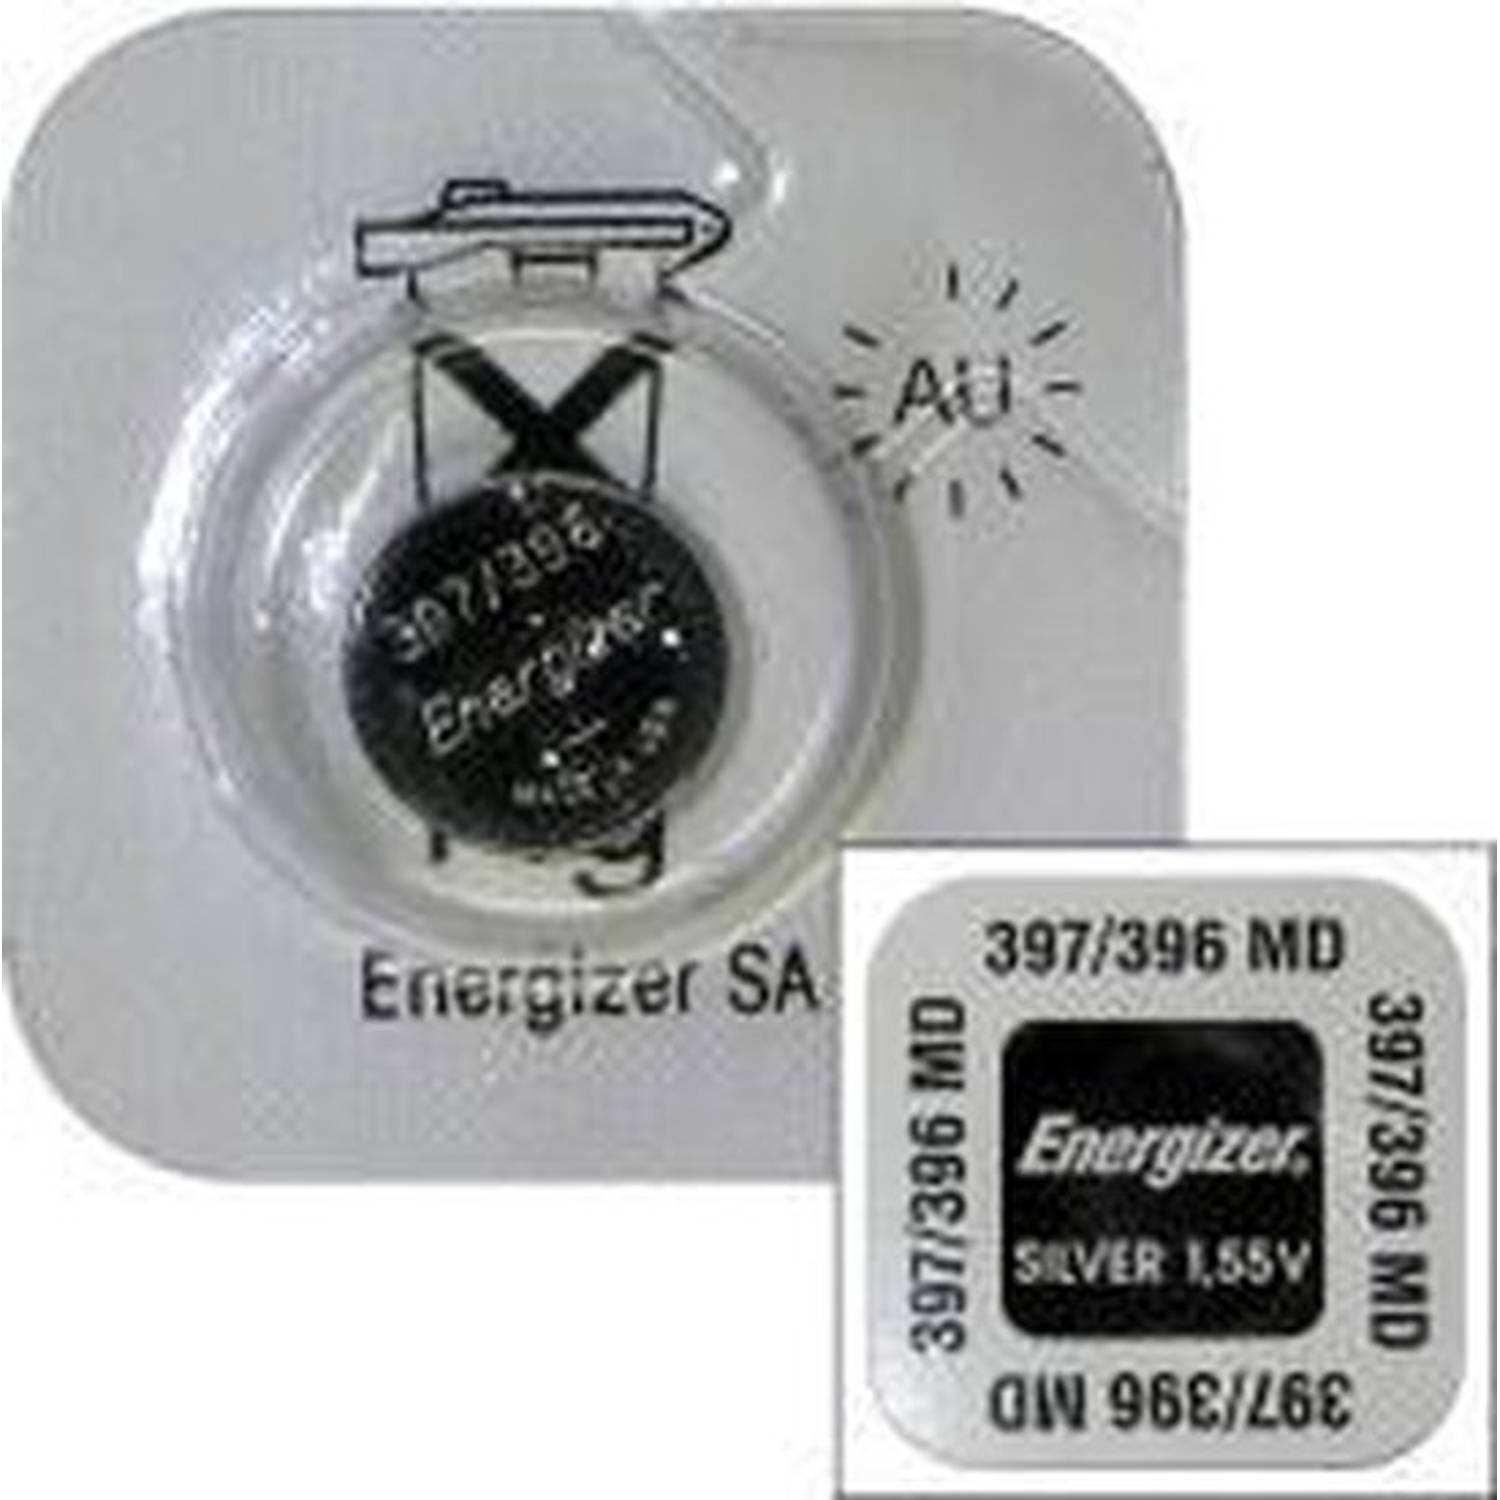 Energizer 397/396 Single-use battery Zilver-oxide (S) 1,55 V